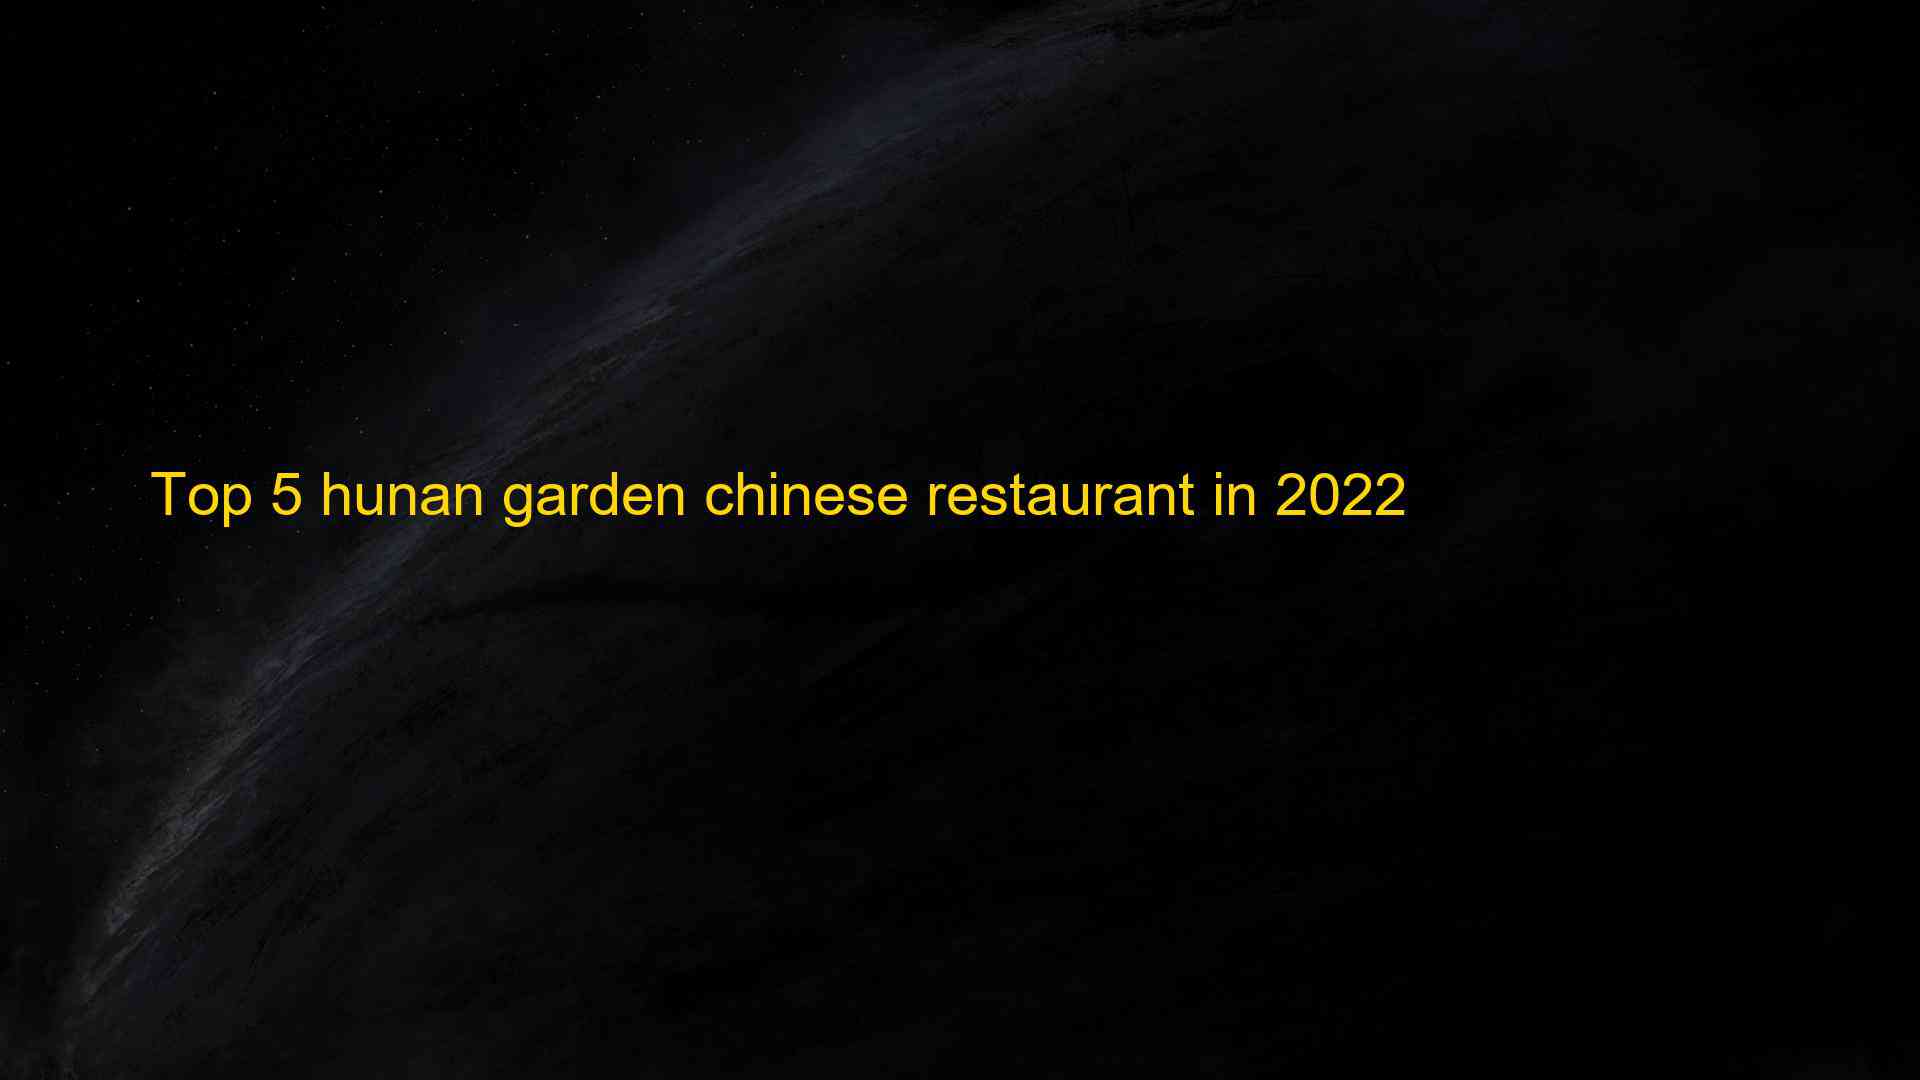 Top 5 hunan garden chinese restaurant in 2022 1663516645